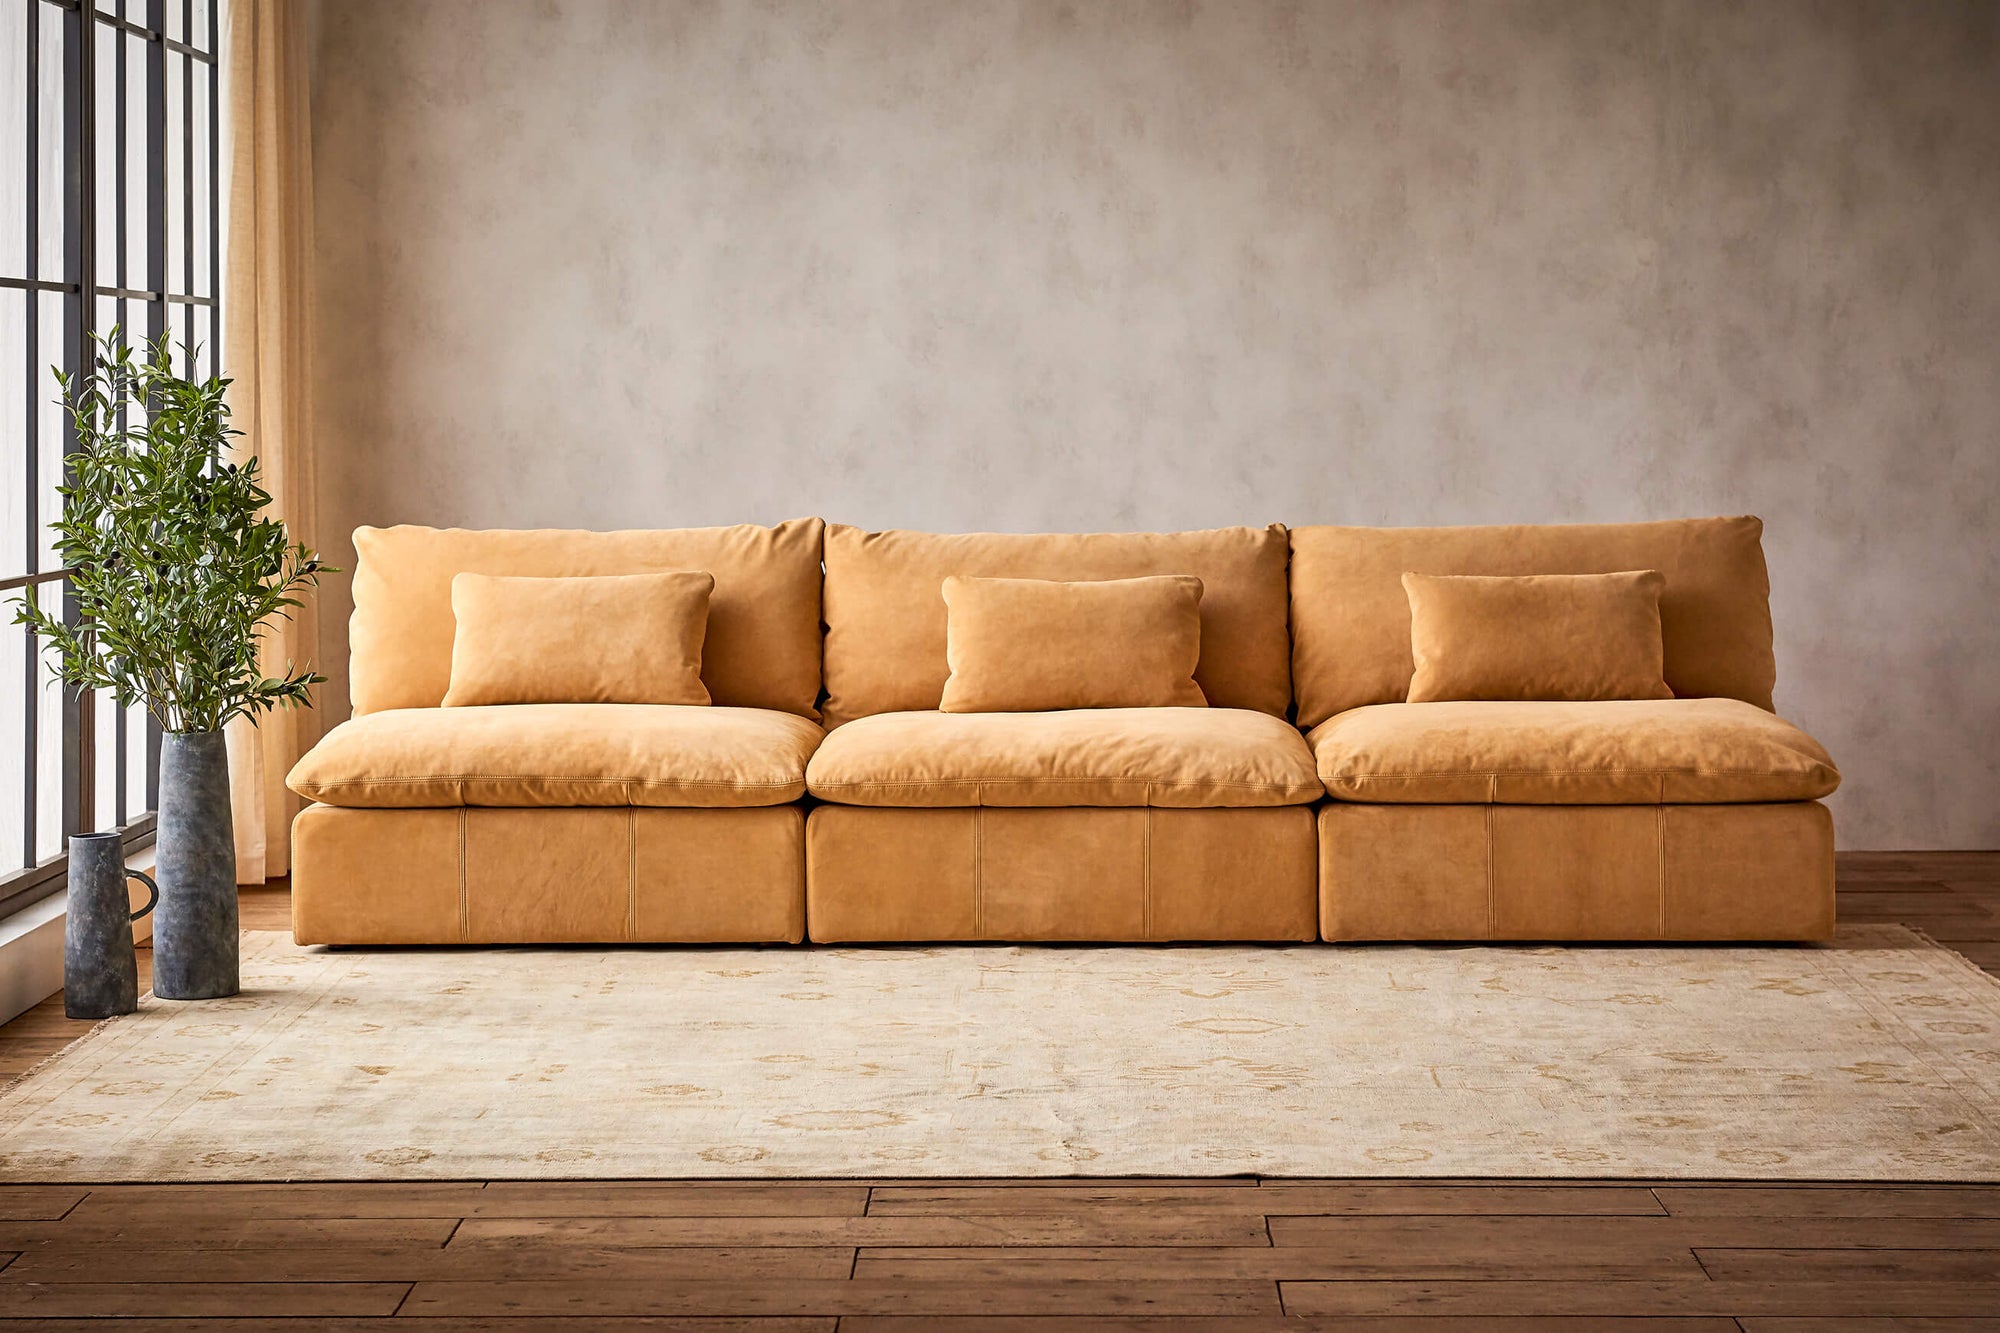 Aria Grande Sectional Sofa in Mojave Glow, a tan Meridian Leather